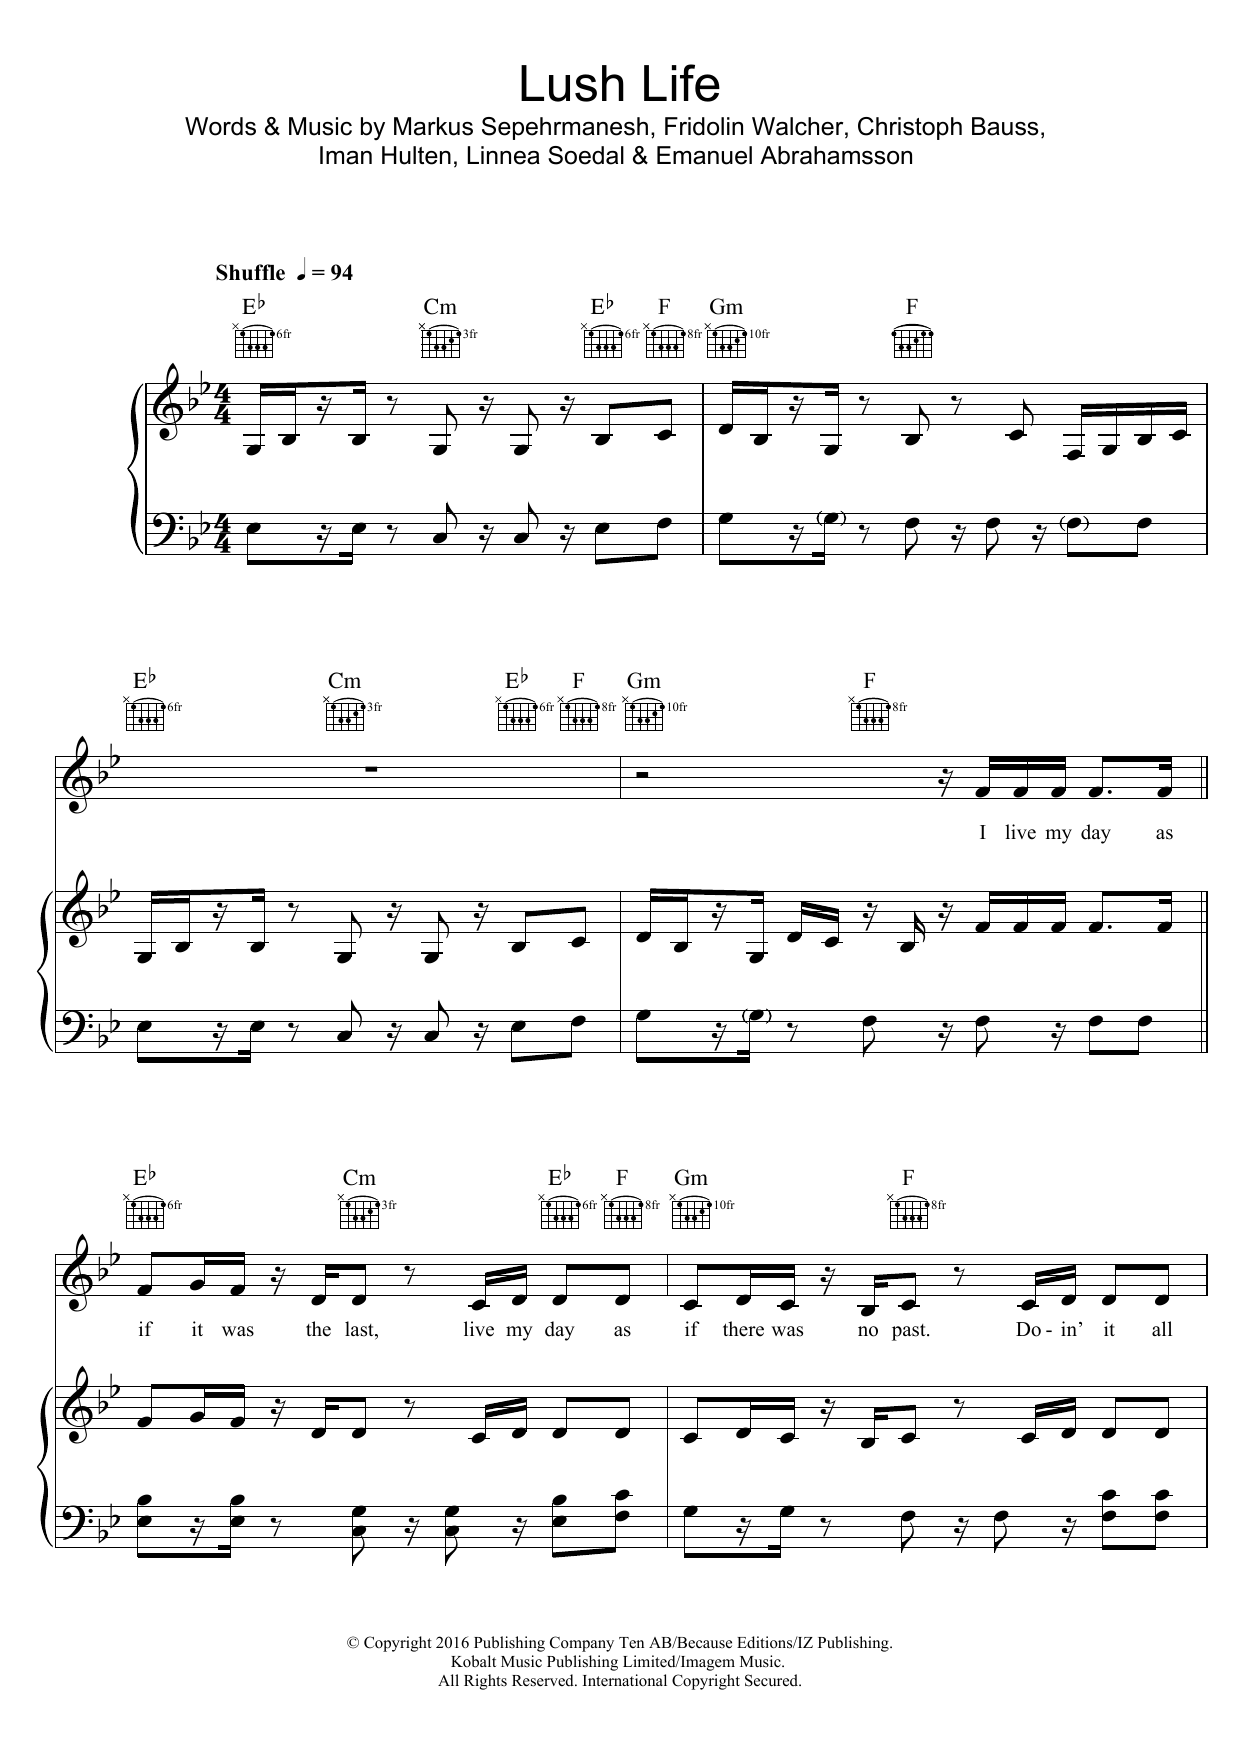 Zara Larsson Lush Life Sheet Music Notes & Chords for Easy Piano - Download or Print PDF